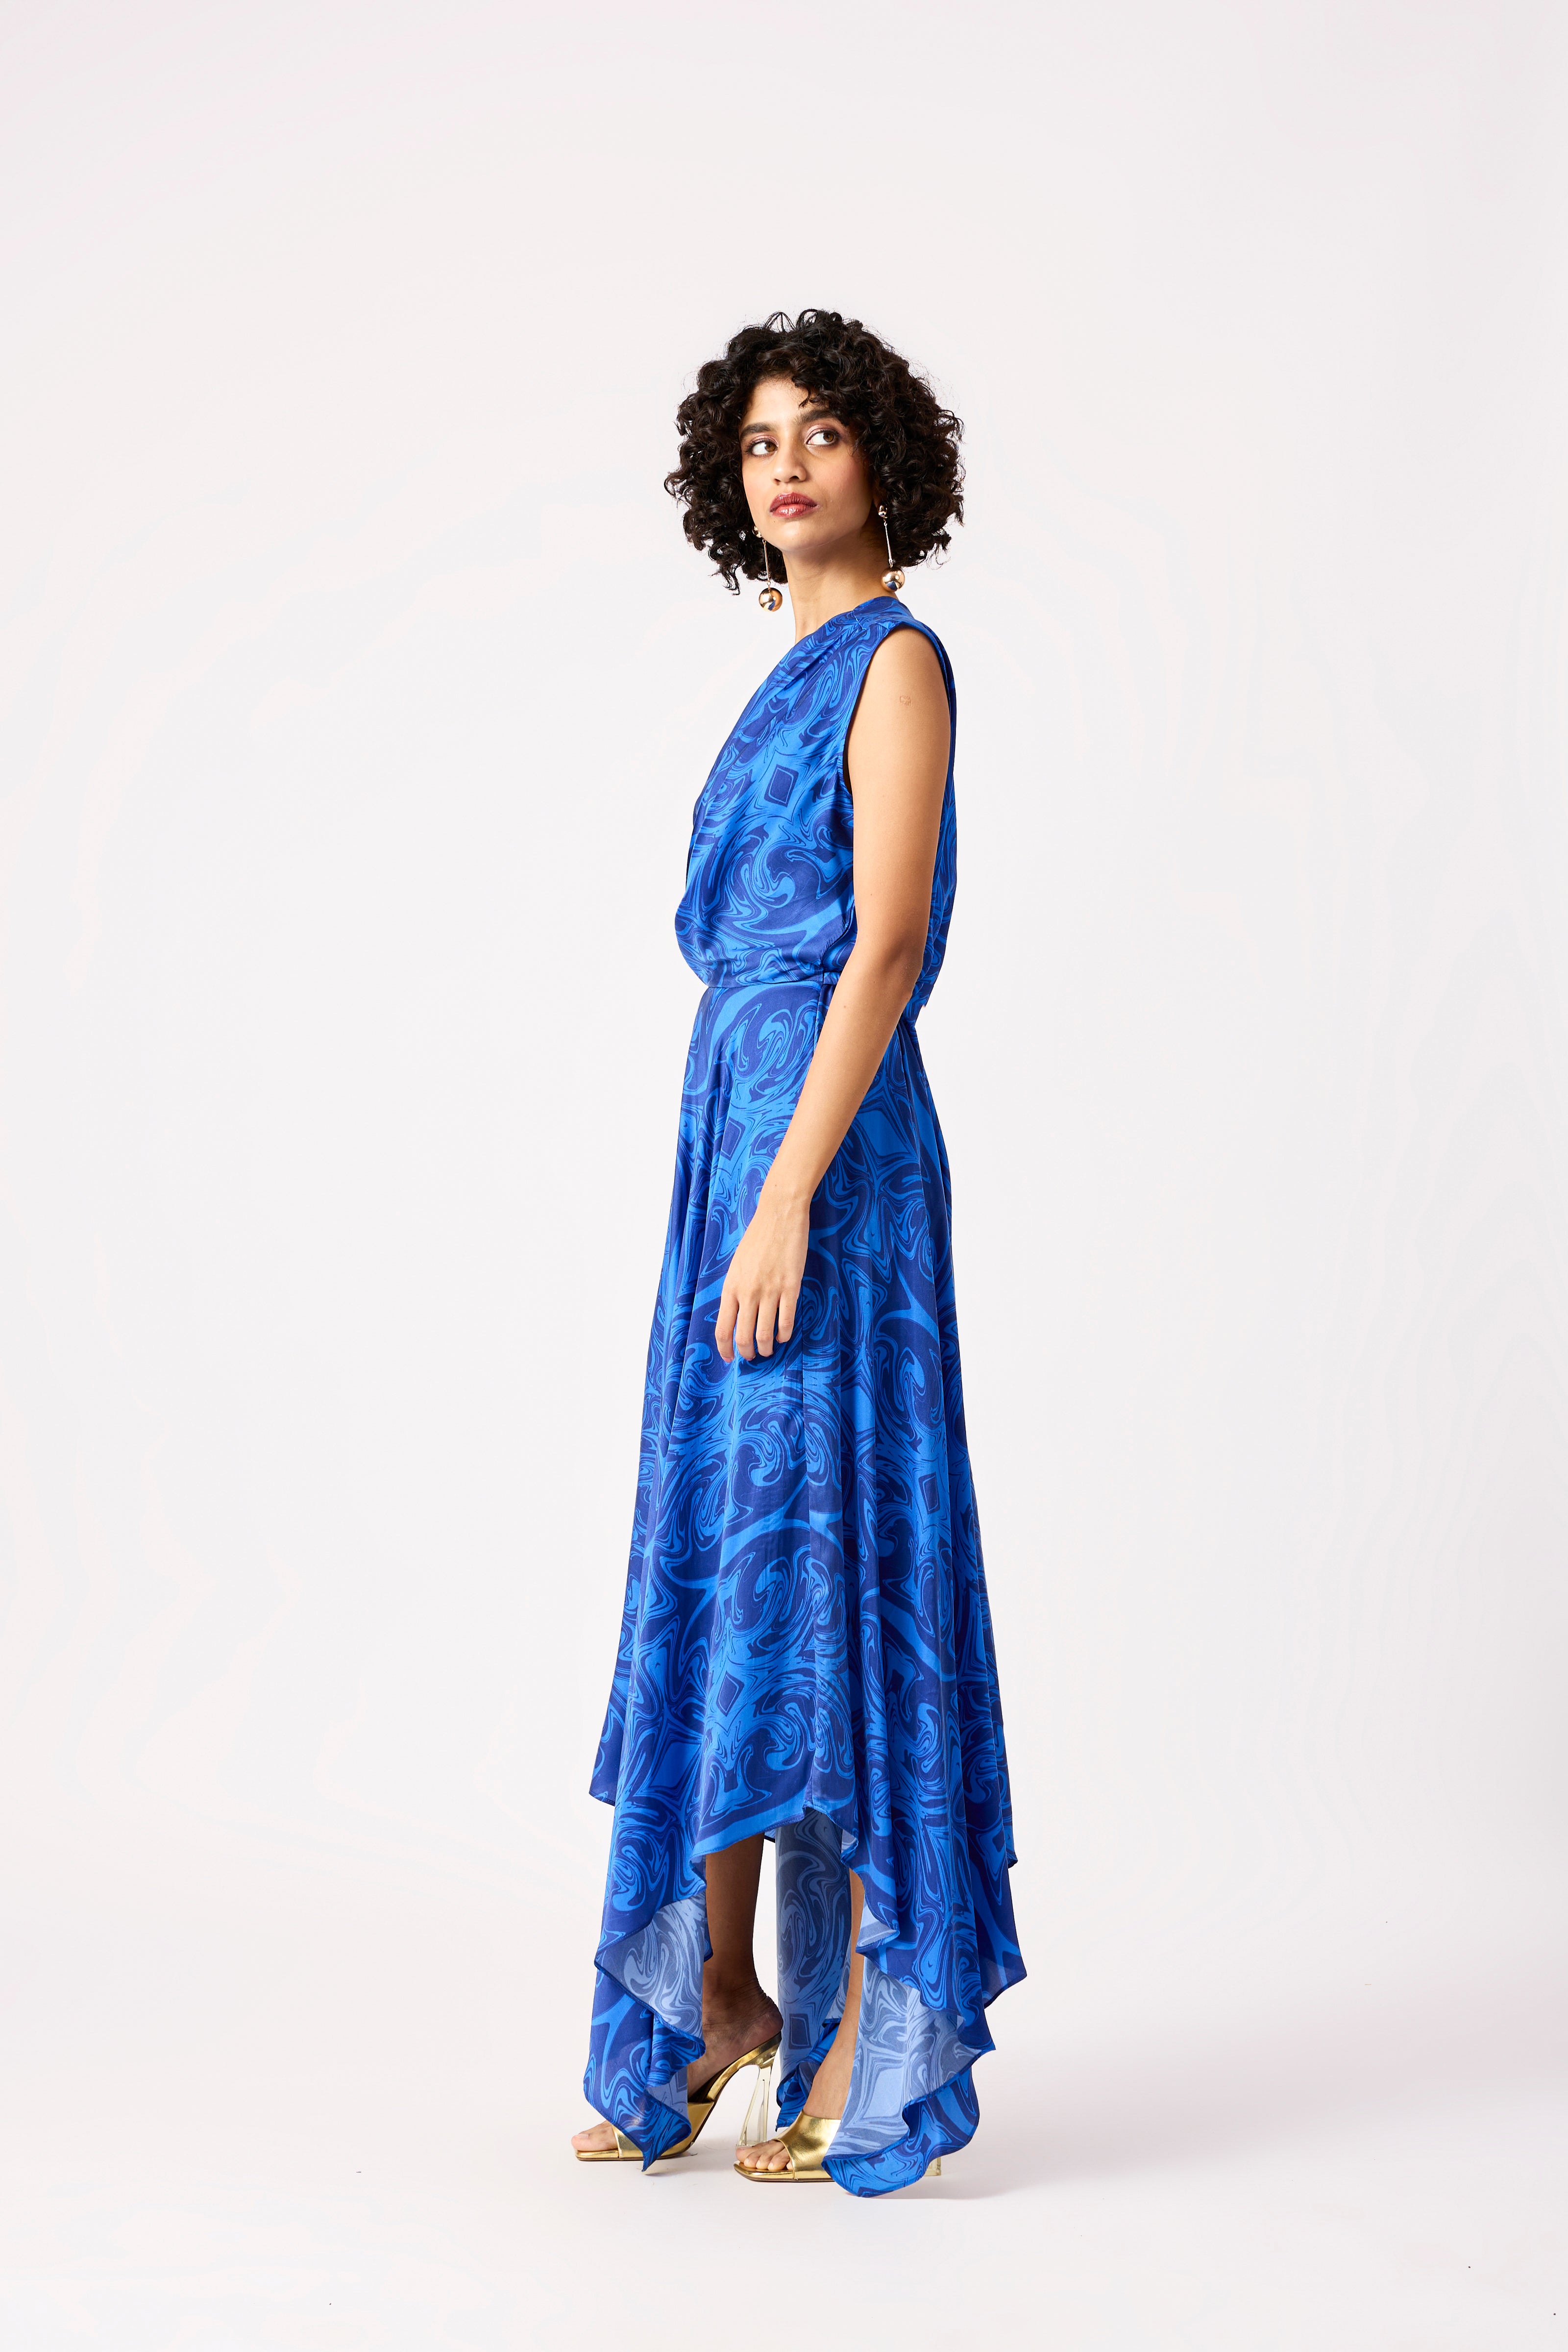 Rosalie Dress - Blue Art Deco